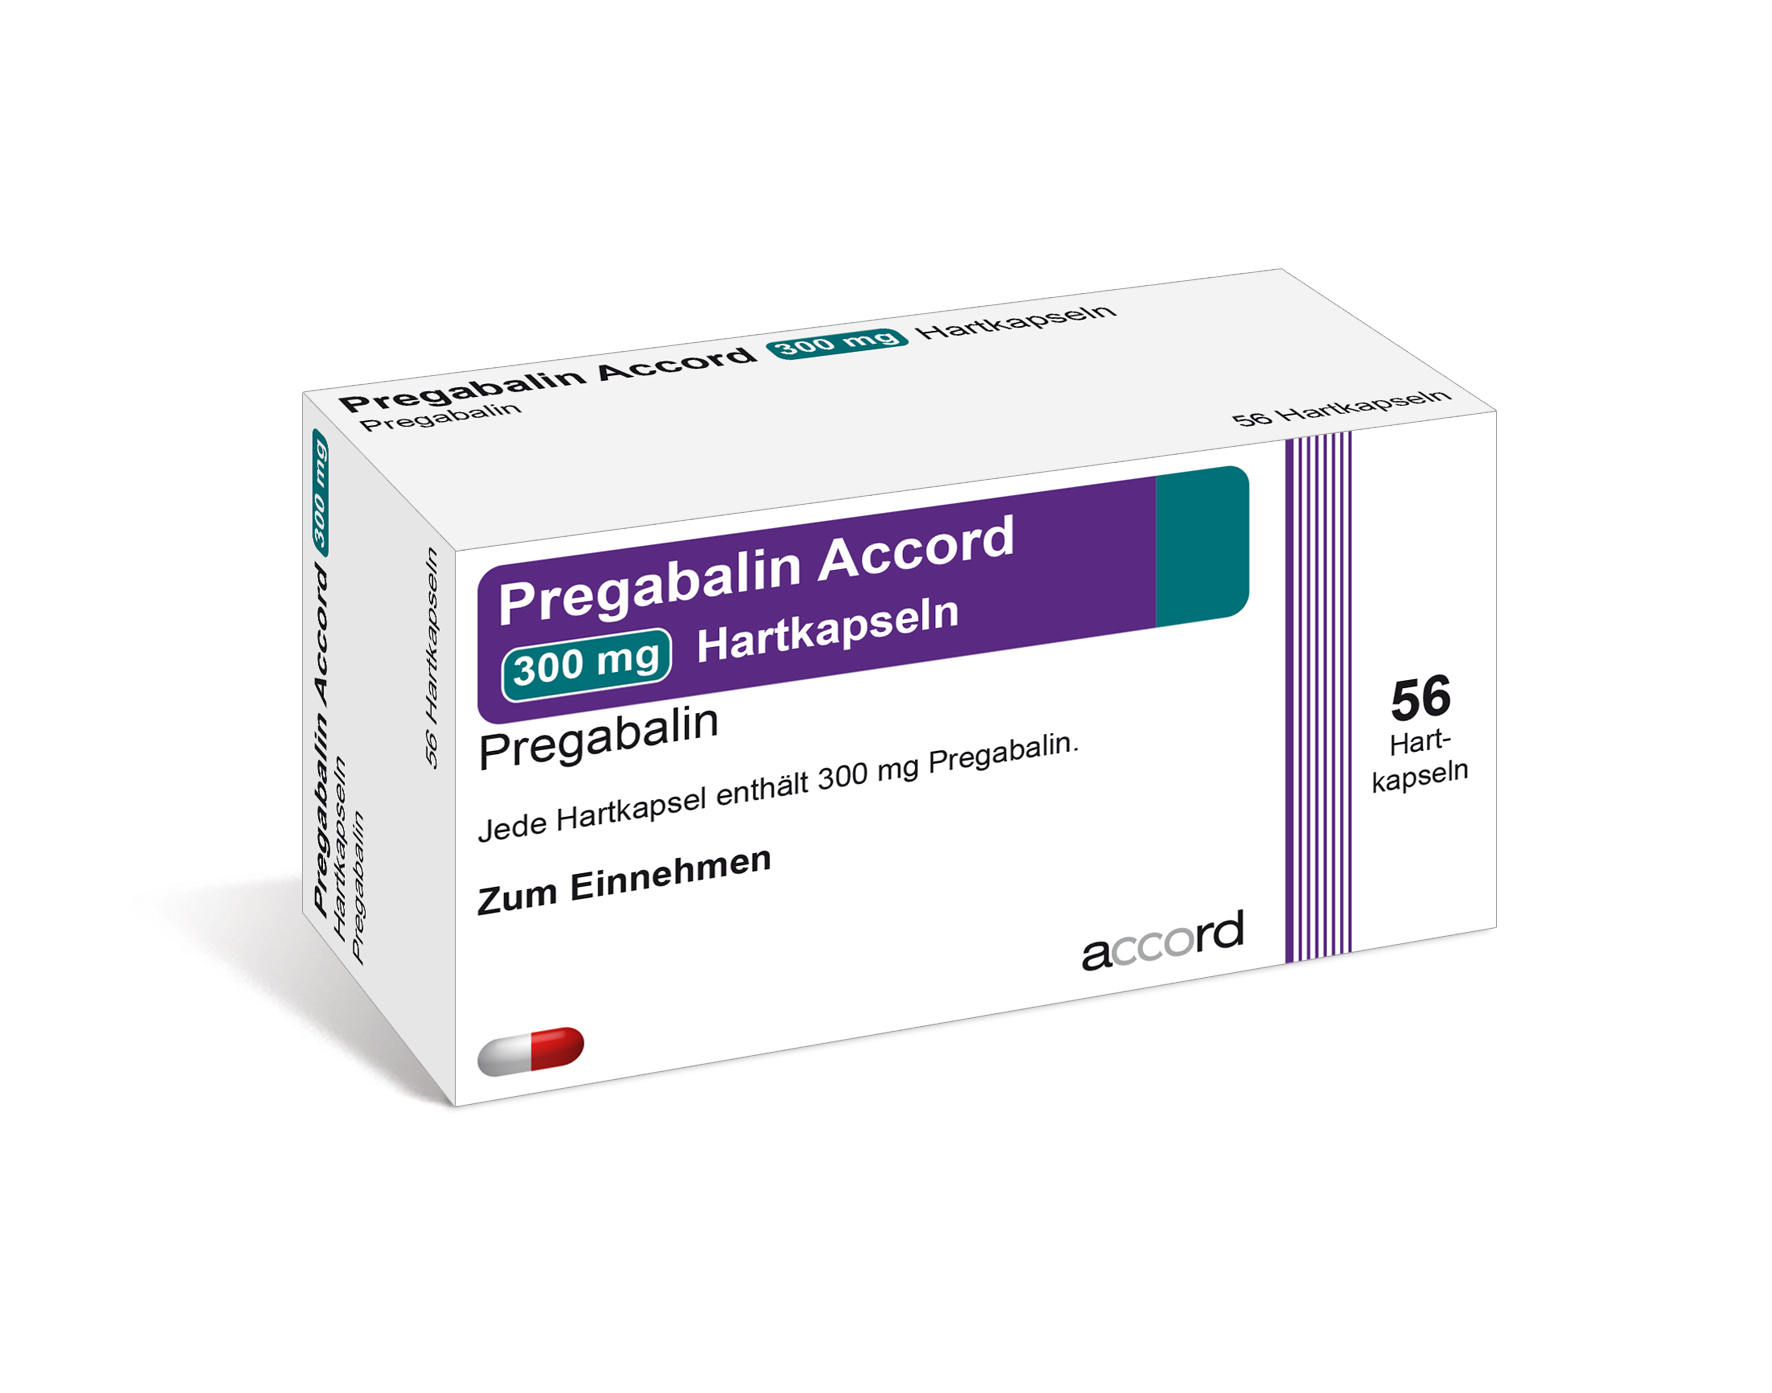 Accord Packshot Pregabalin 300 mg